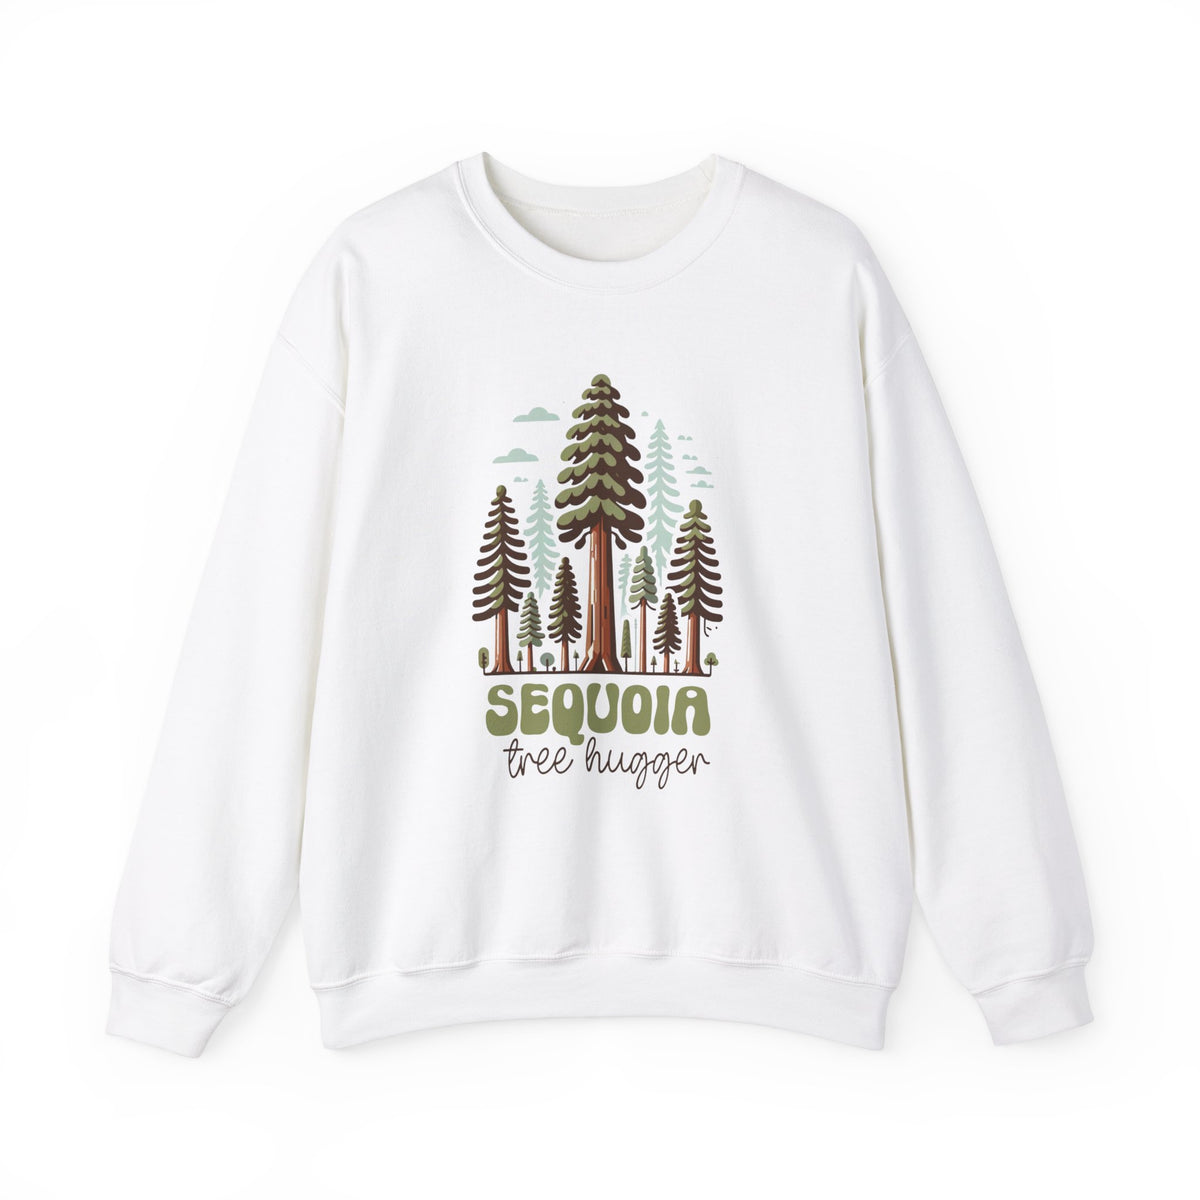 Sequoia National Park Shirt | Sequoia Tree Hugger Shirt | Camping Shirt | Nature Lover Gift | Unisex Crewneck Sweatshirt